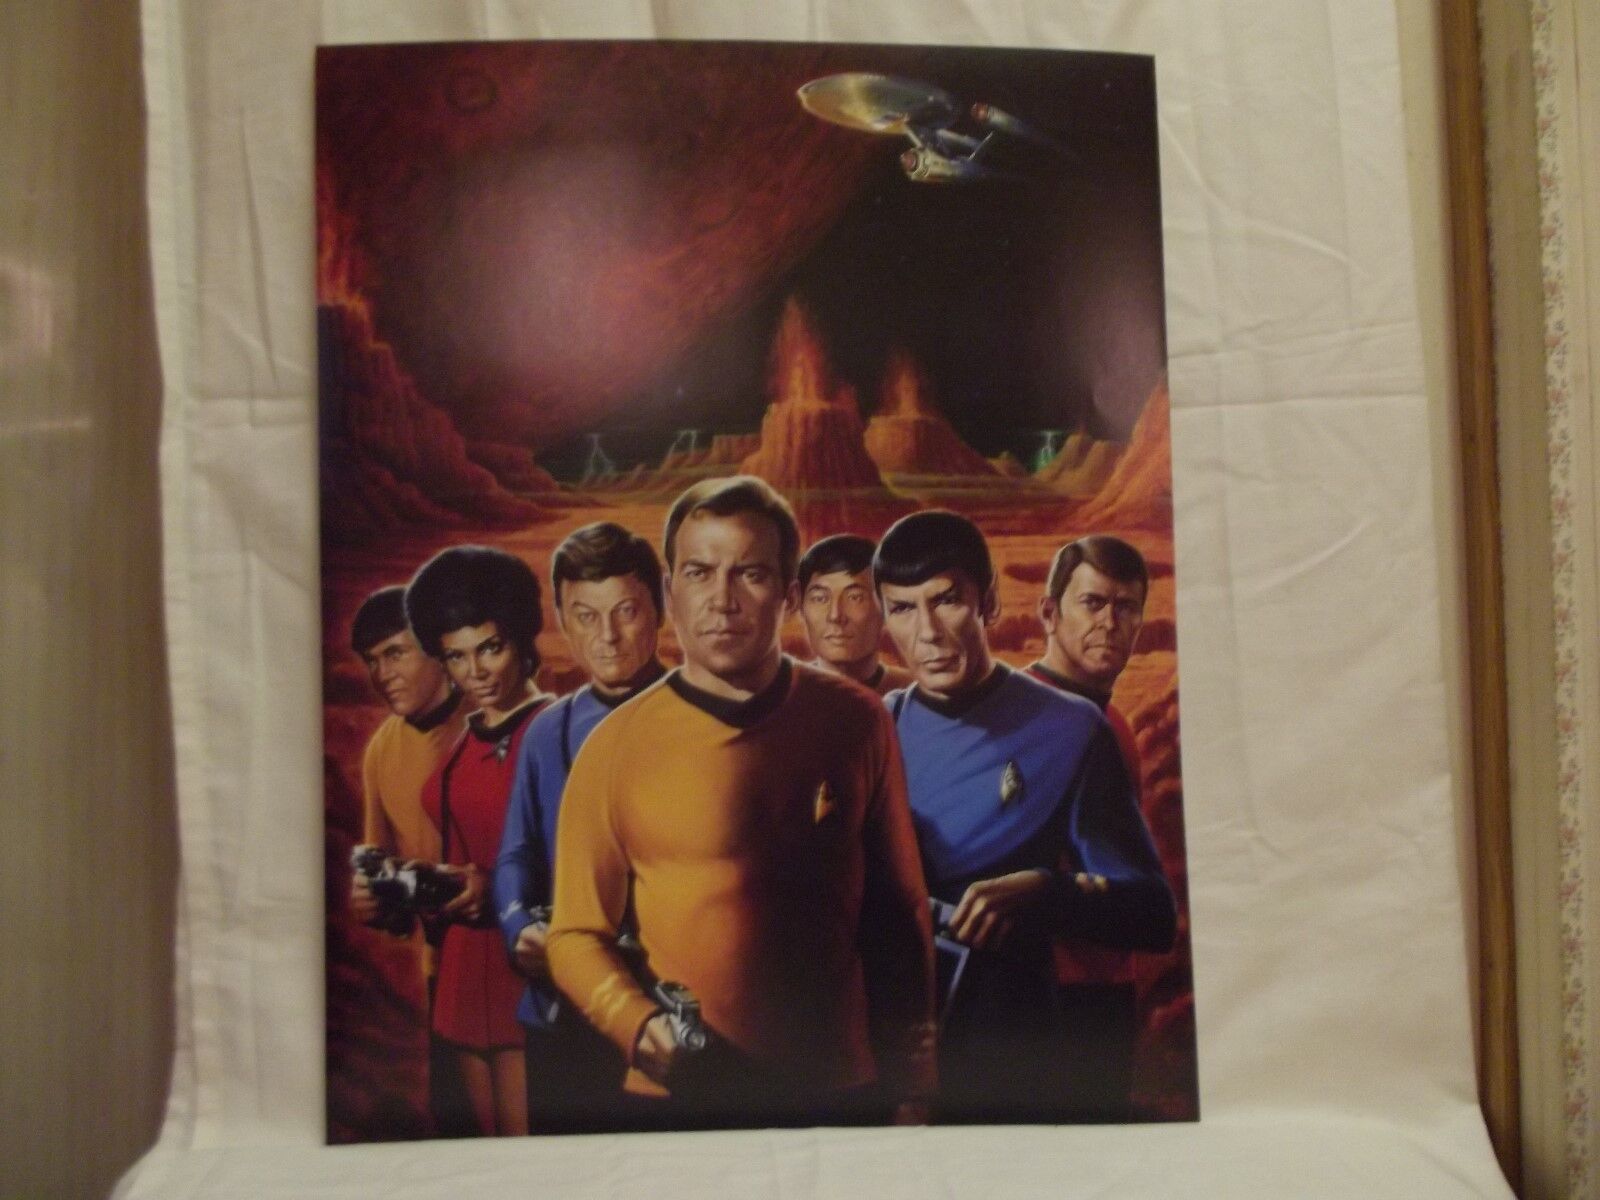 Star Trek The Original Series Group Cast Image 22 x 28 Poster ULTRA RARE